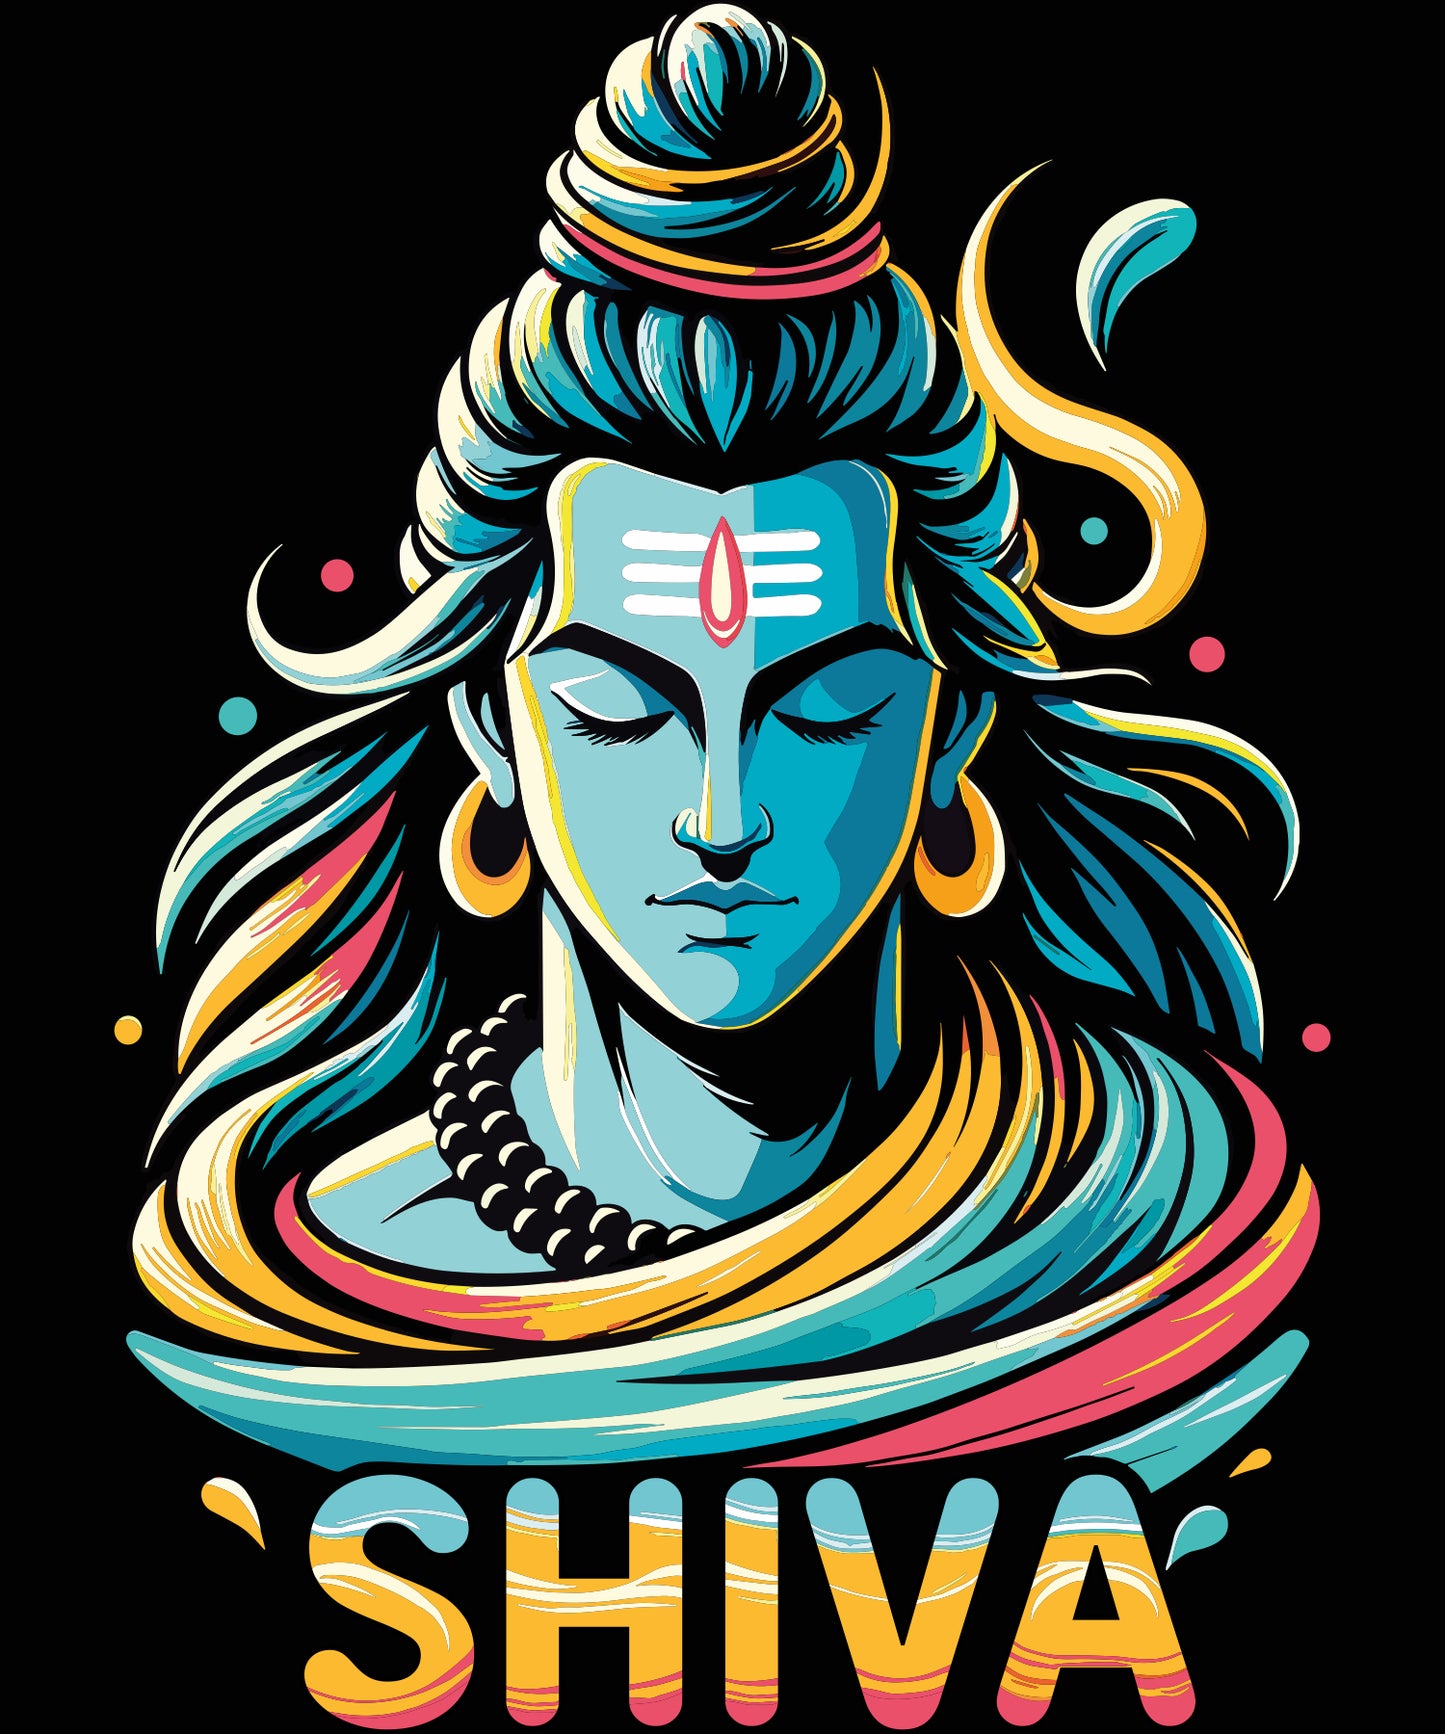 Shiva Black DropShoulder T-Shirt